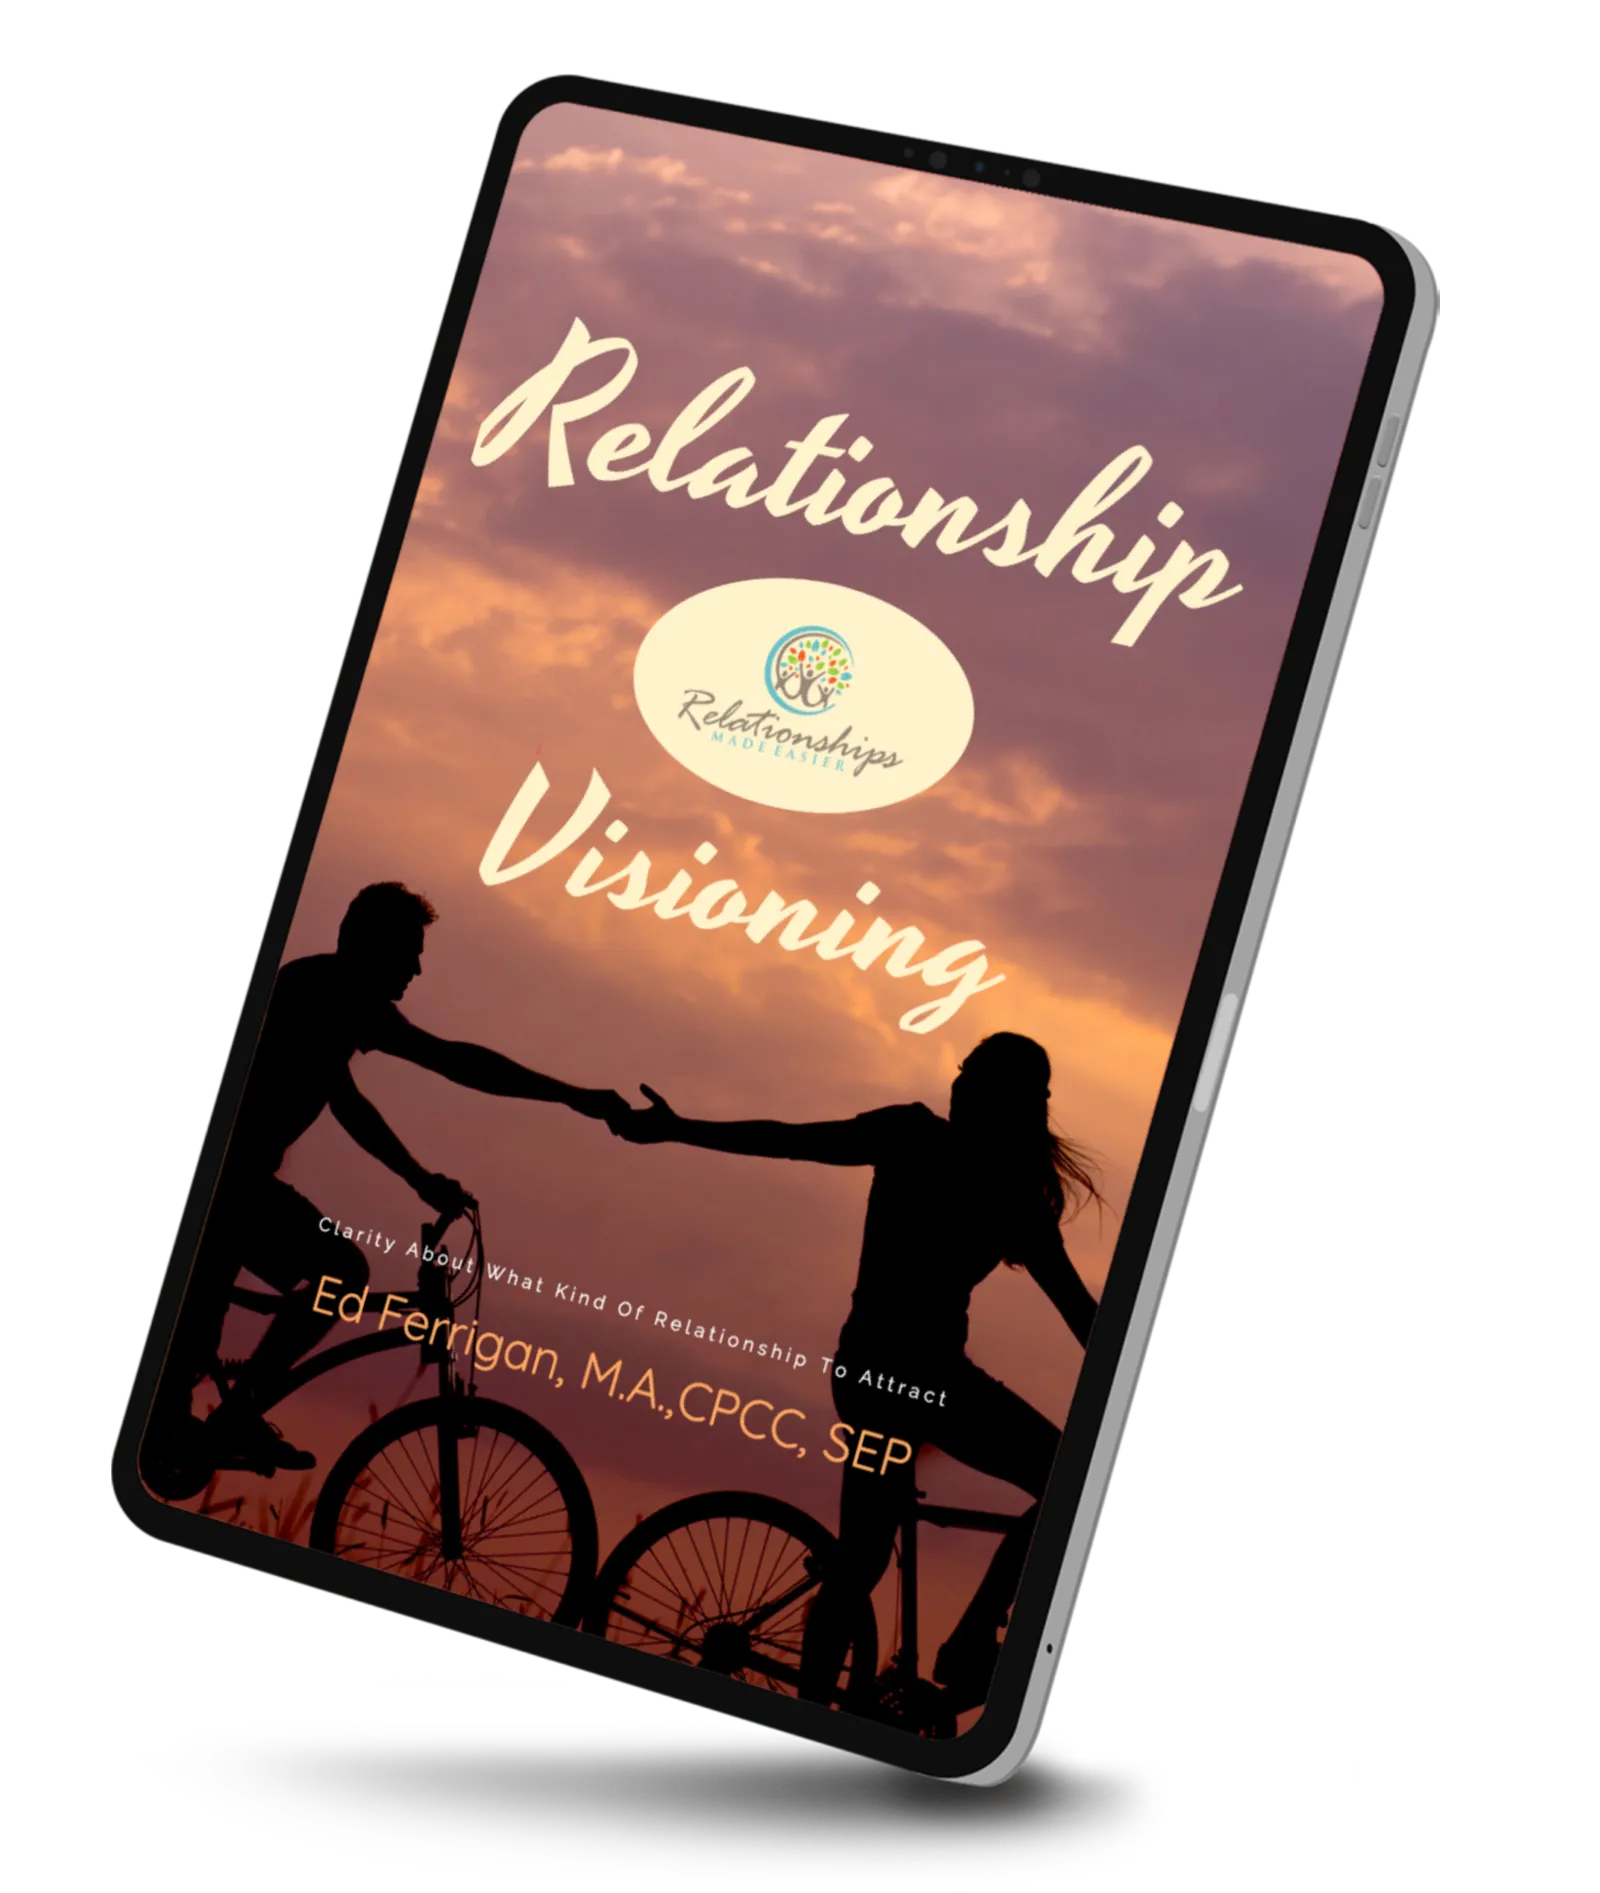 Relationship Visioning Doc Image